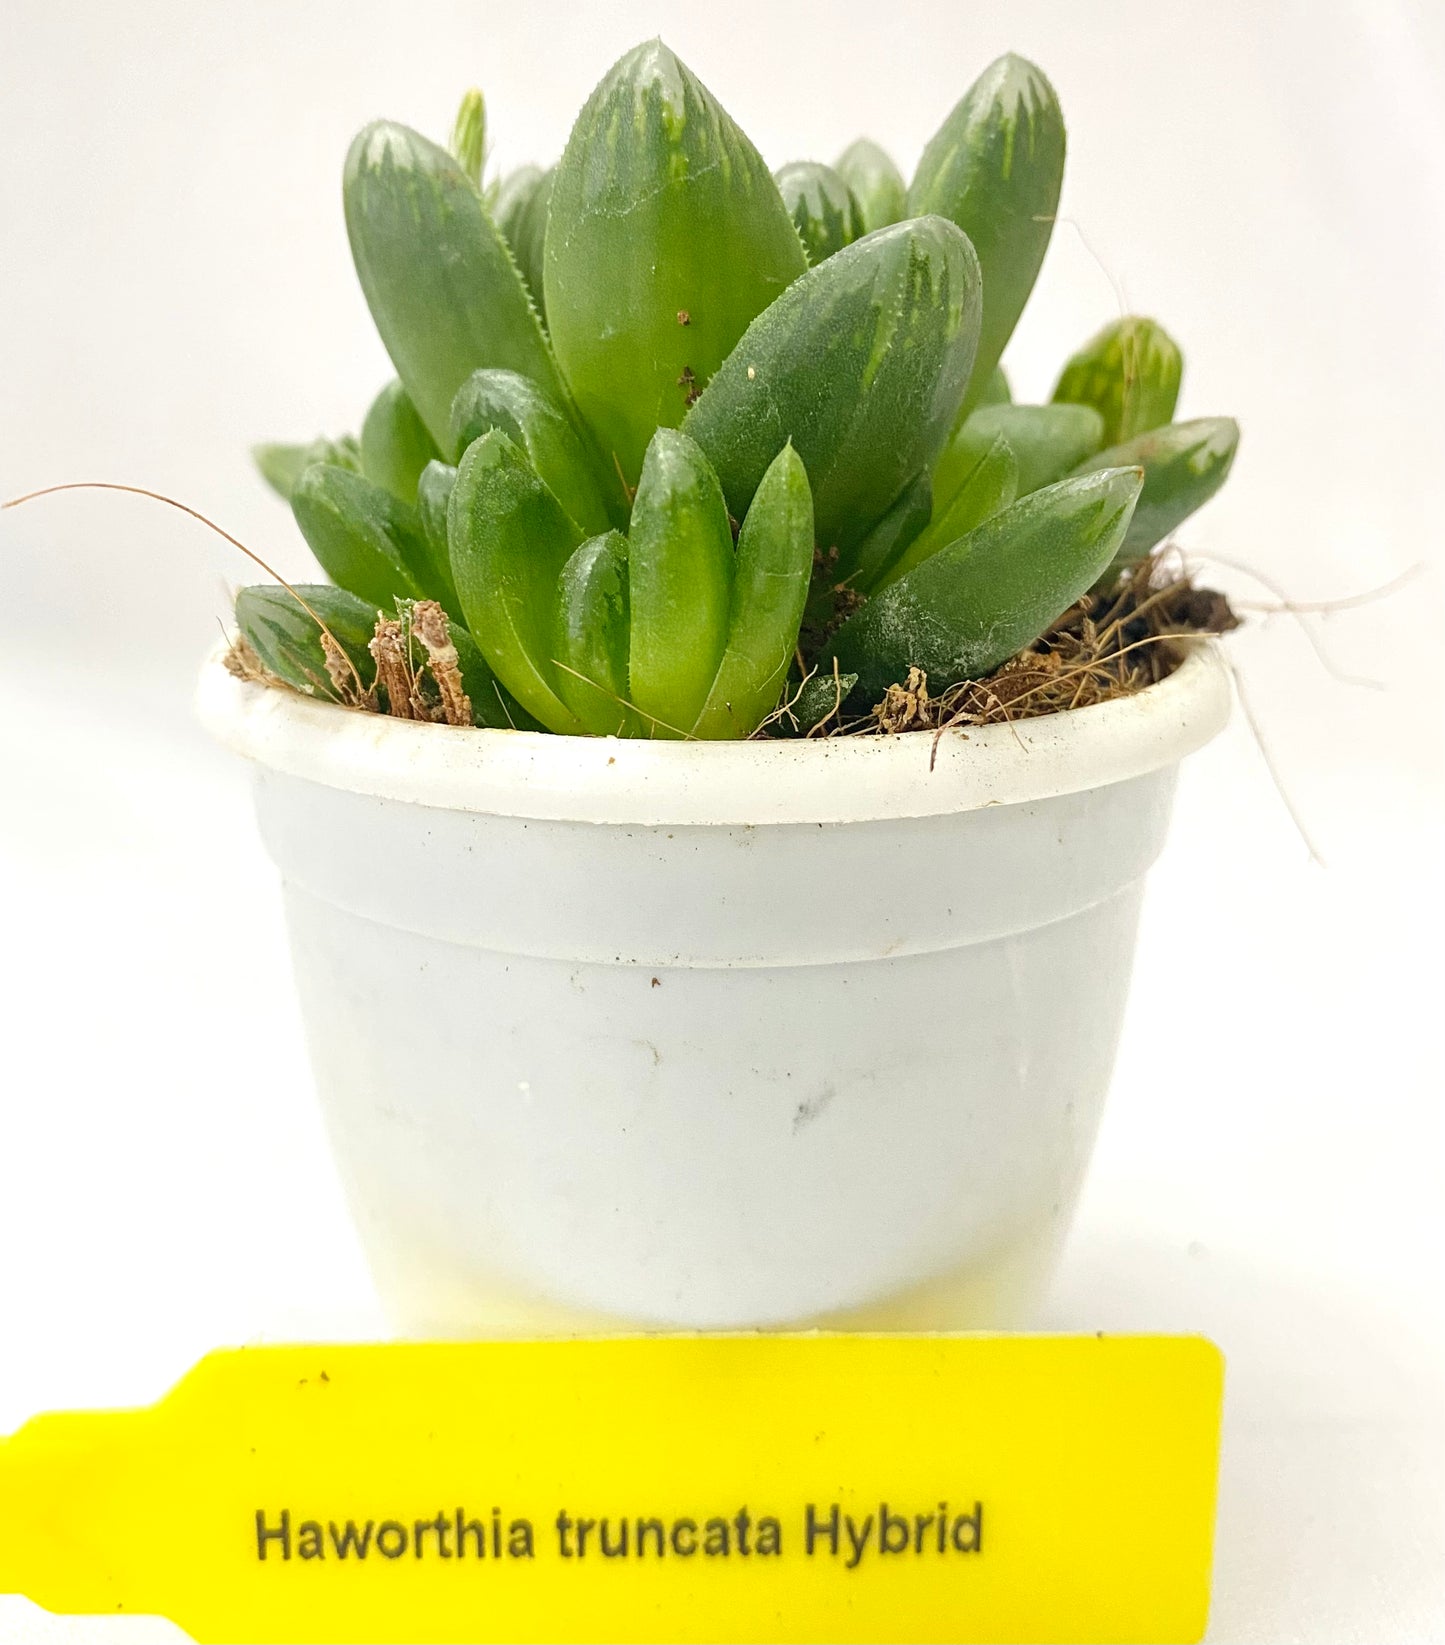 Haworthia truncata Hybrid